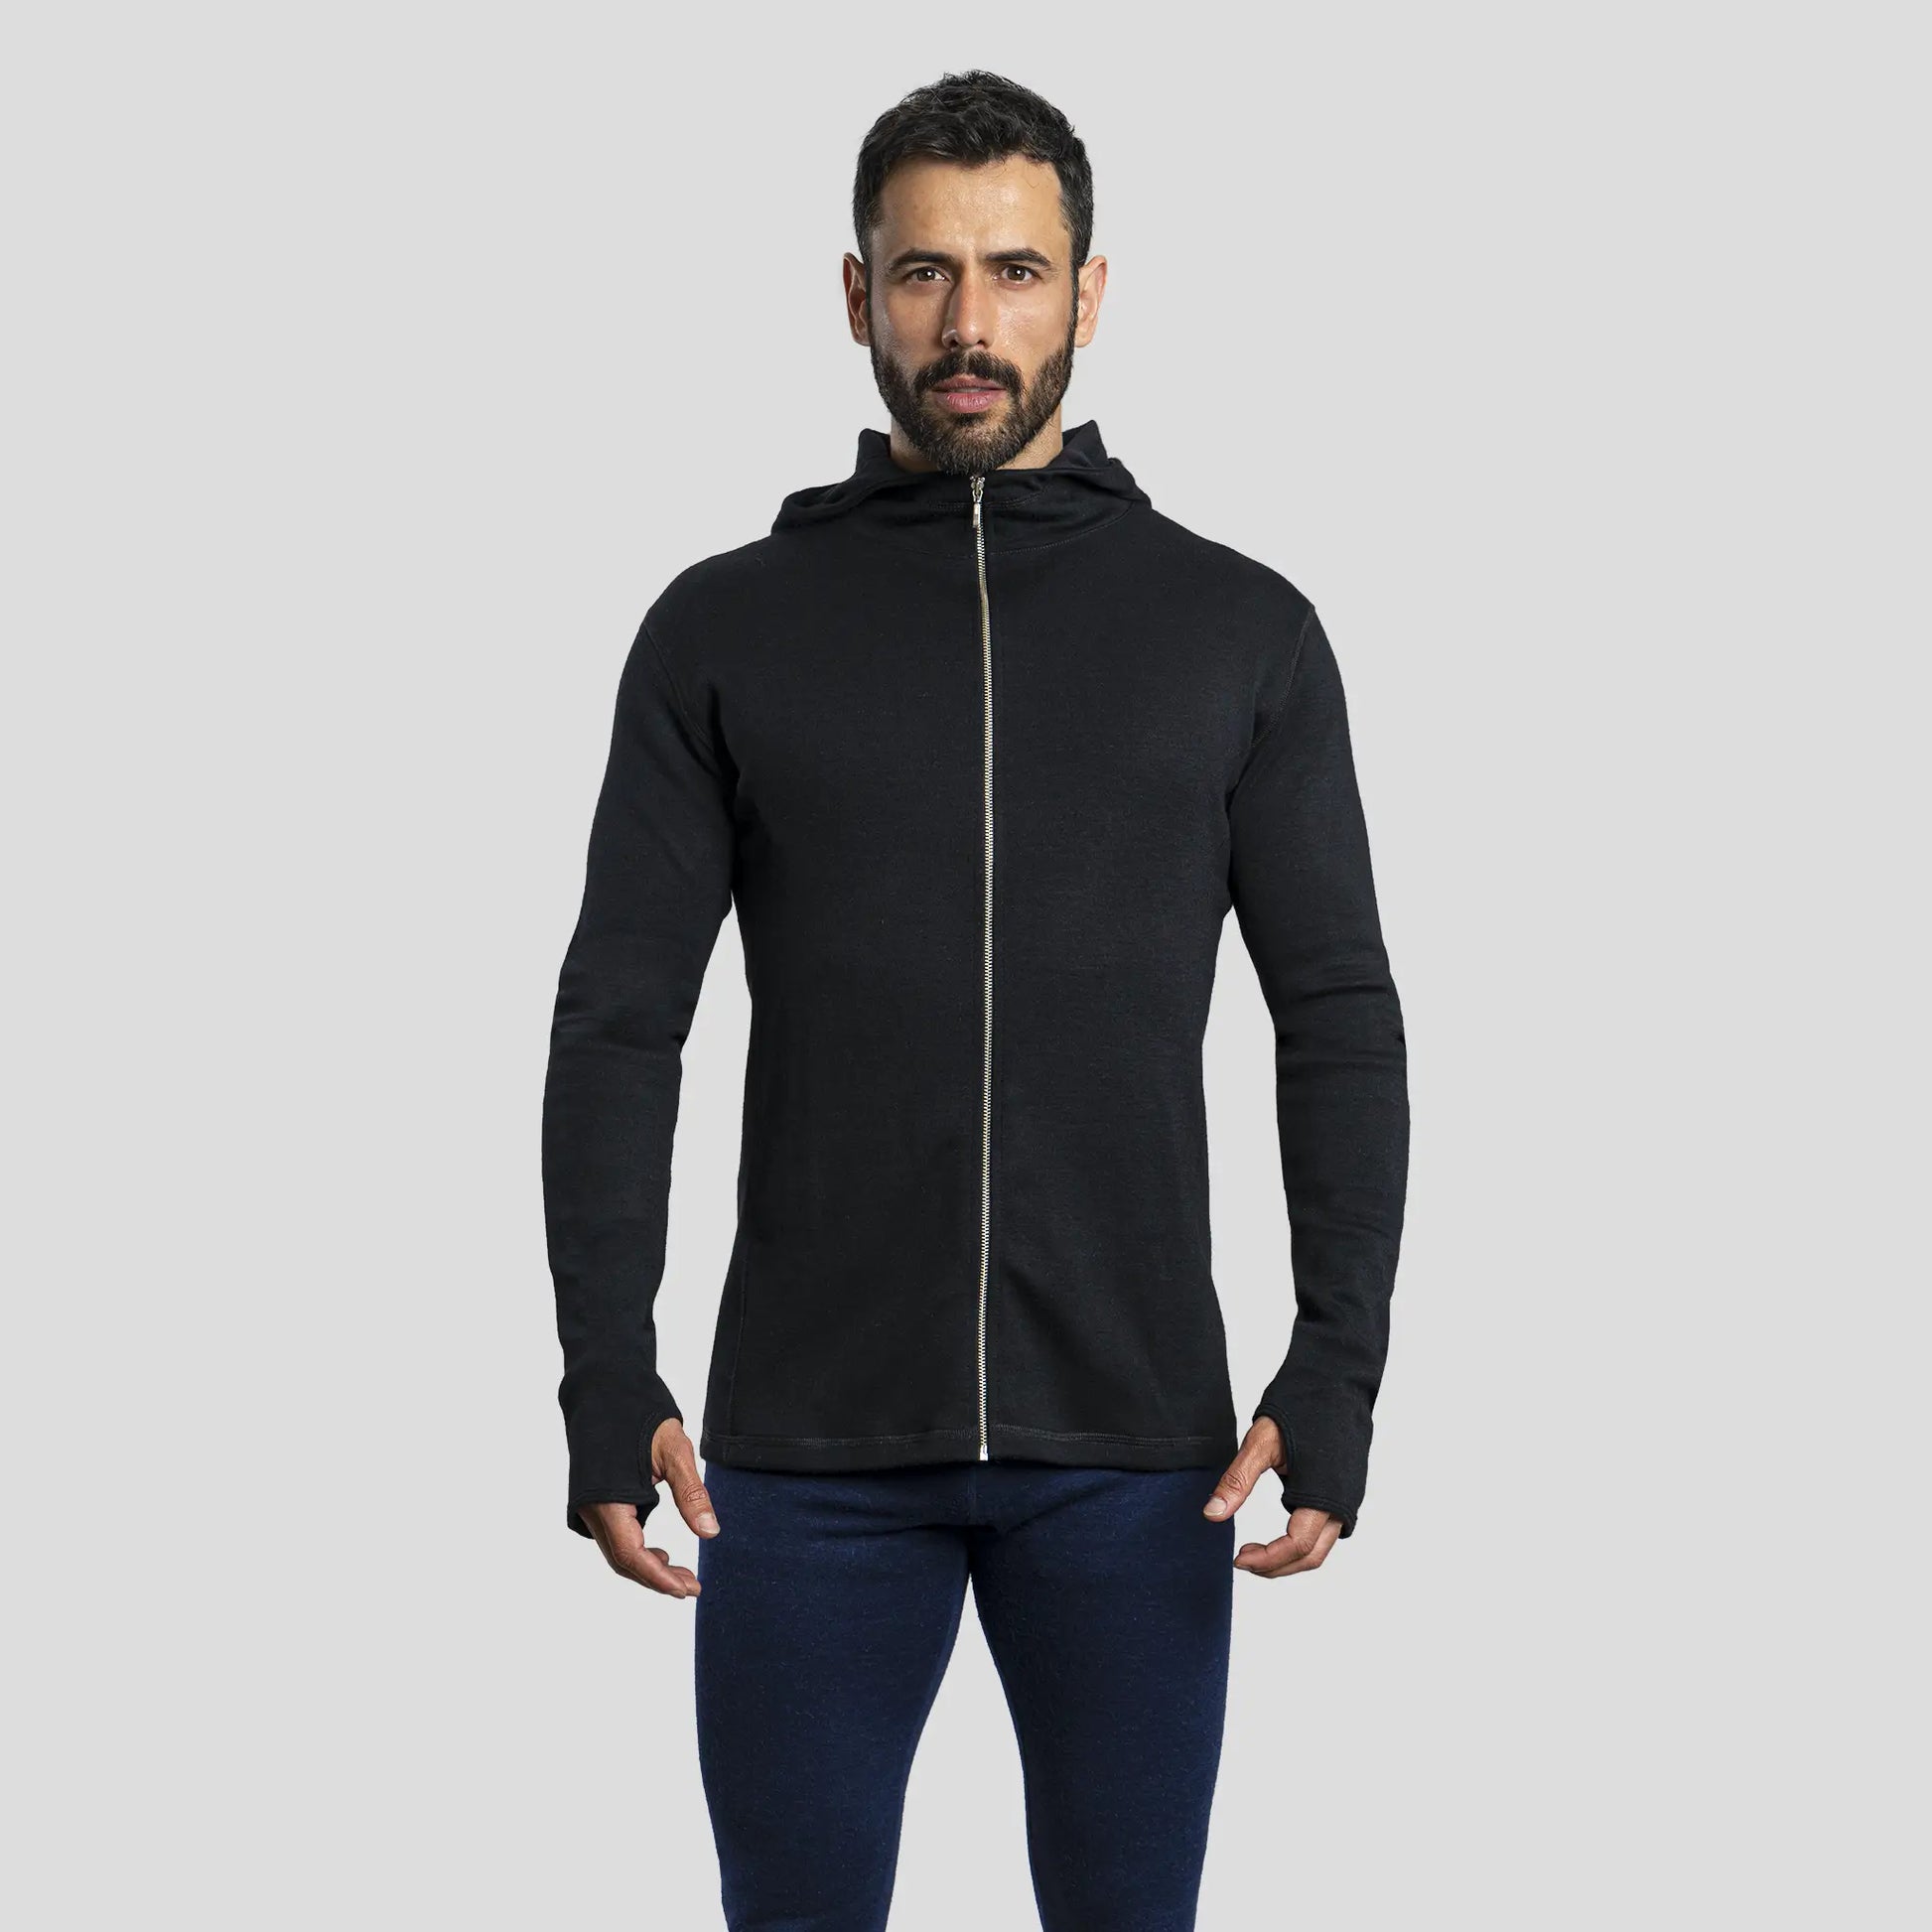 mens temperature regulate hoodie jacket full zip color black